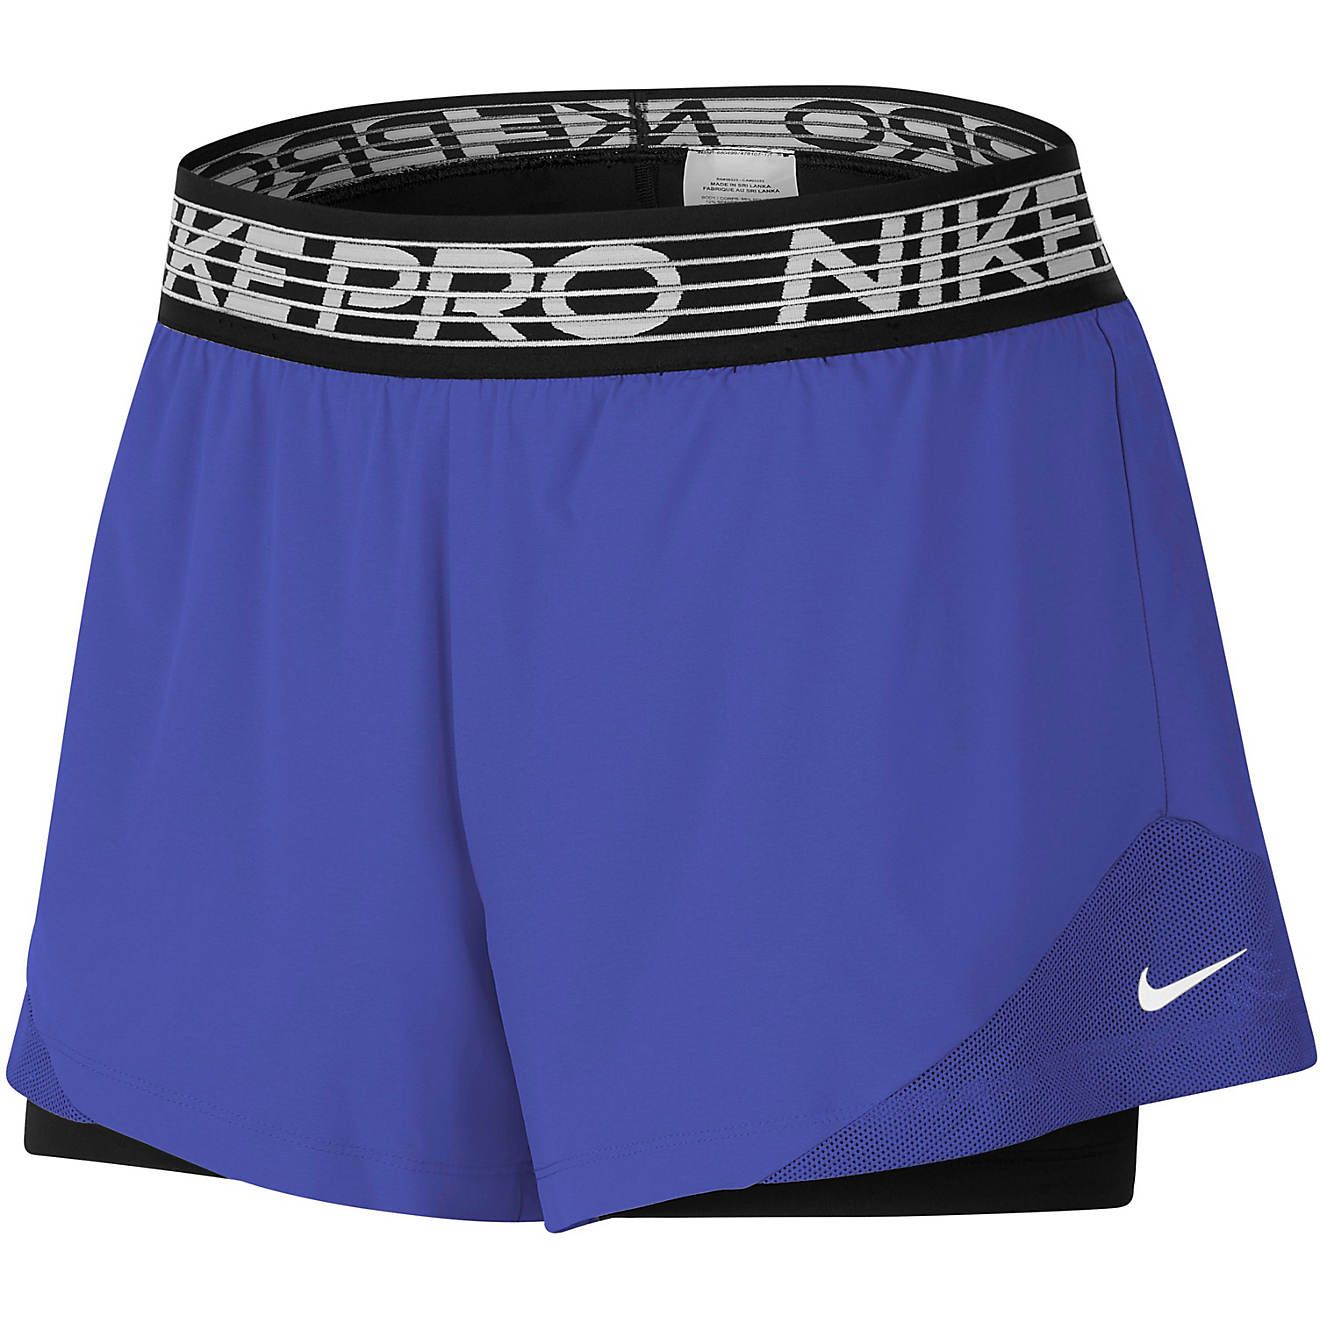 Nike Women's Pro Flex 2-in-1 Shorts | Academy Sports + Outdoor Affiliate